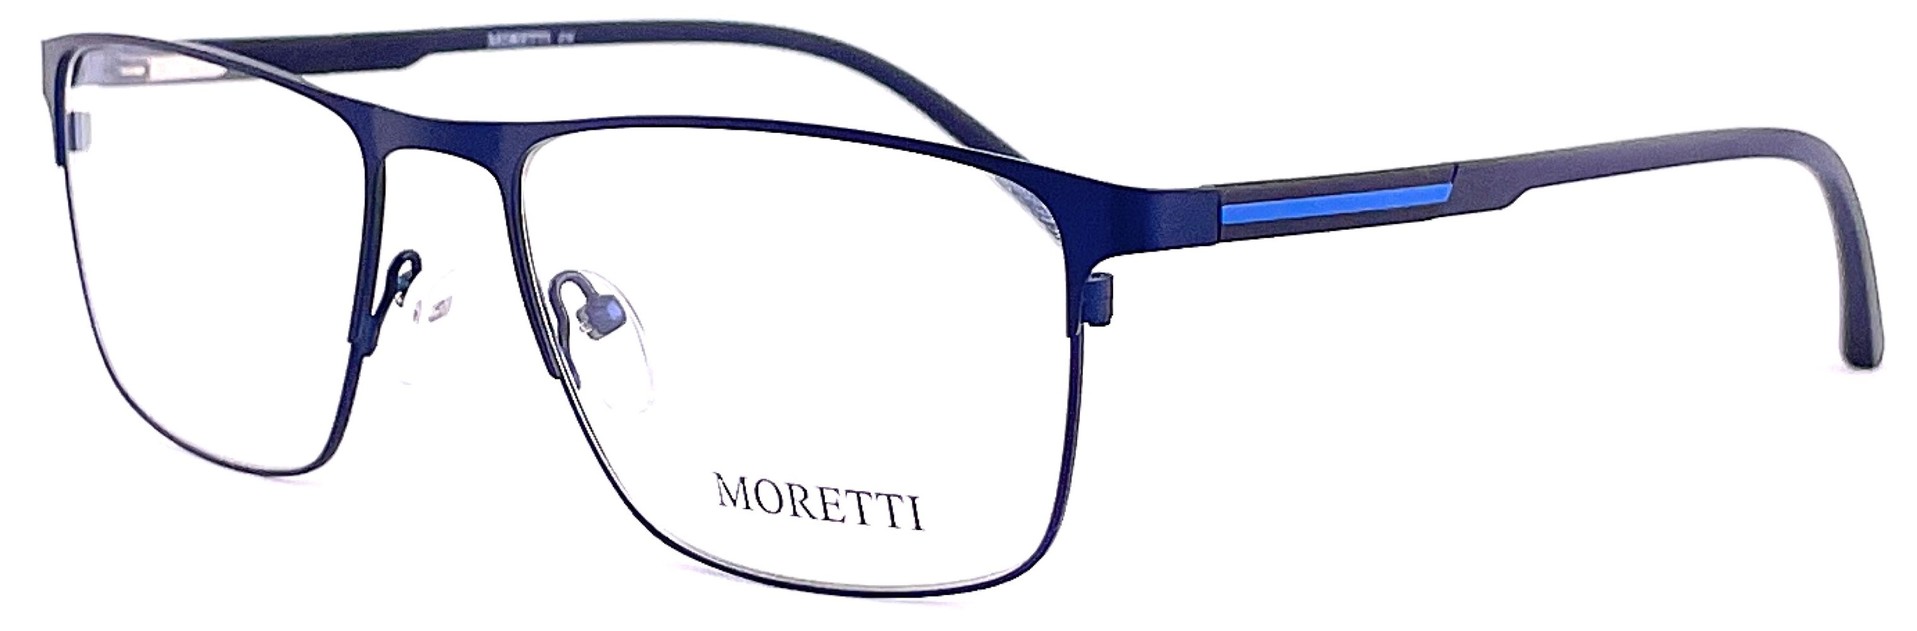 Moretti HE05-10 C6A 2